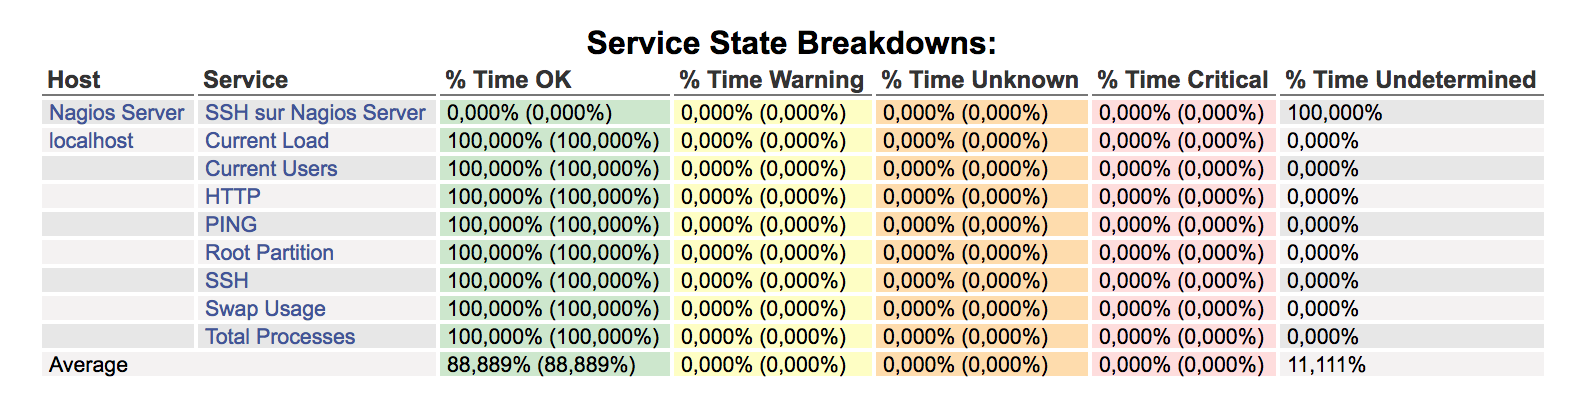 Service state breakdowns